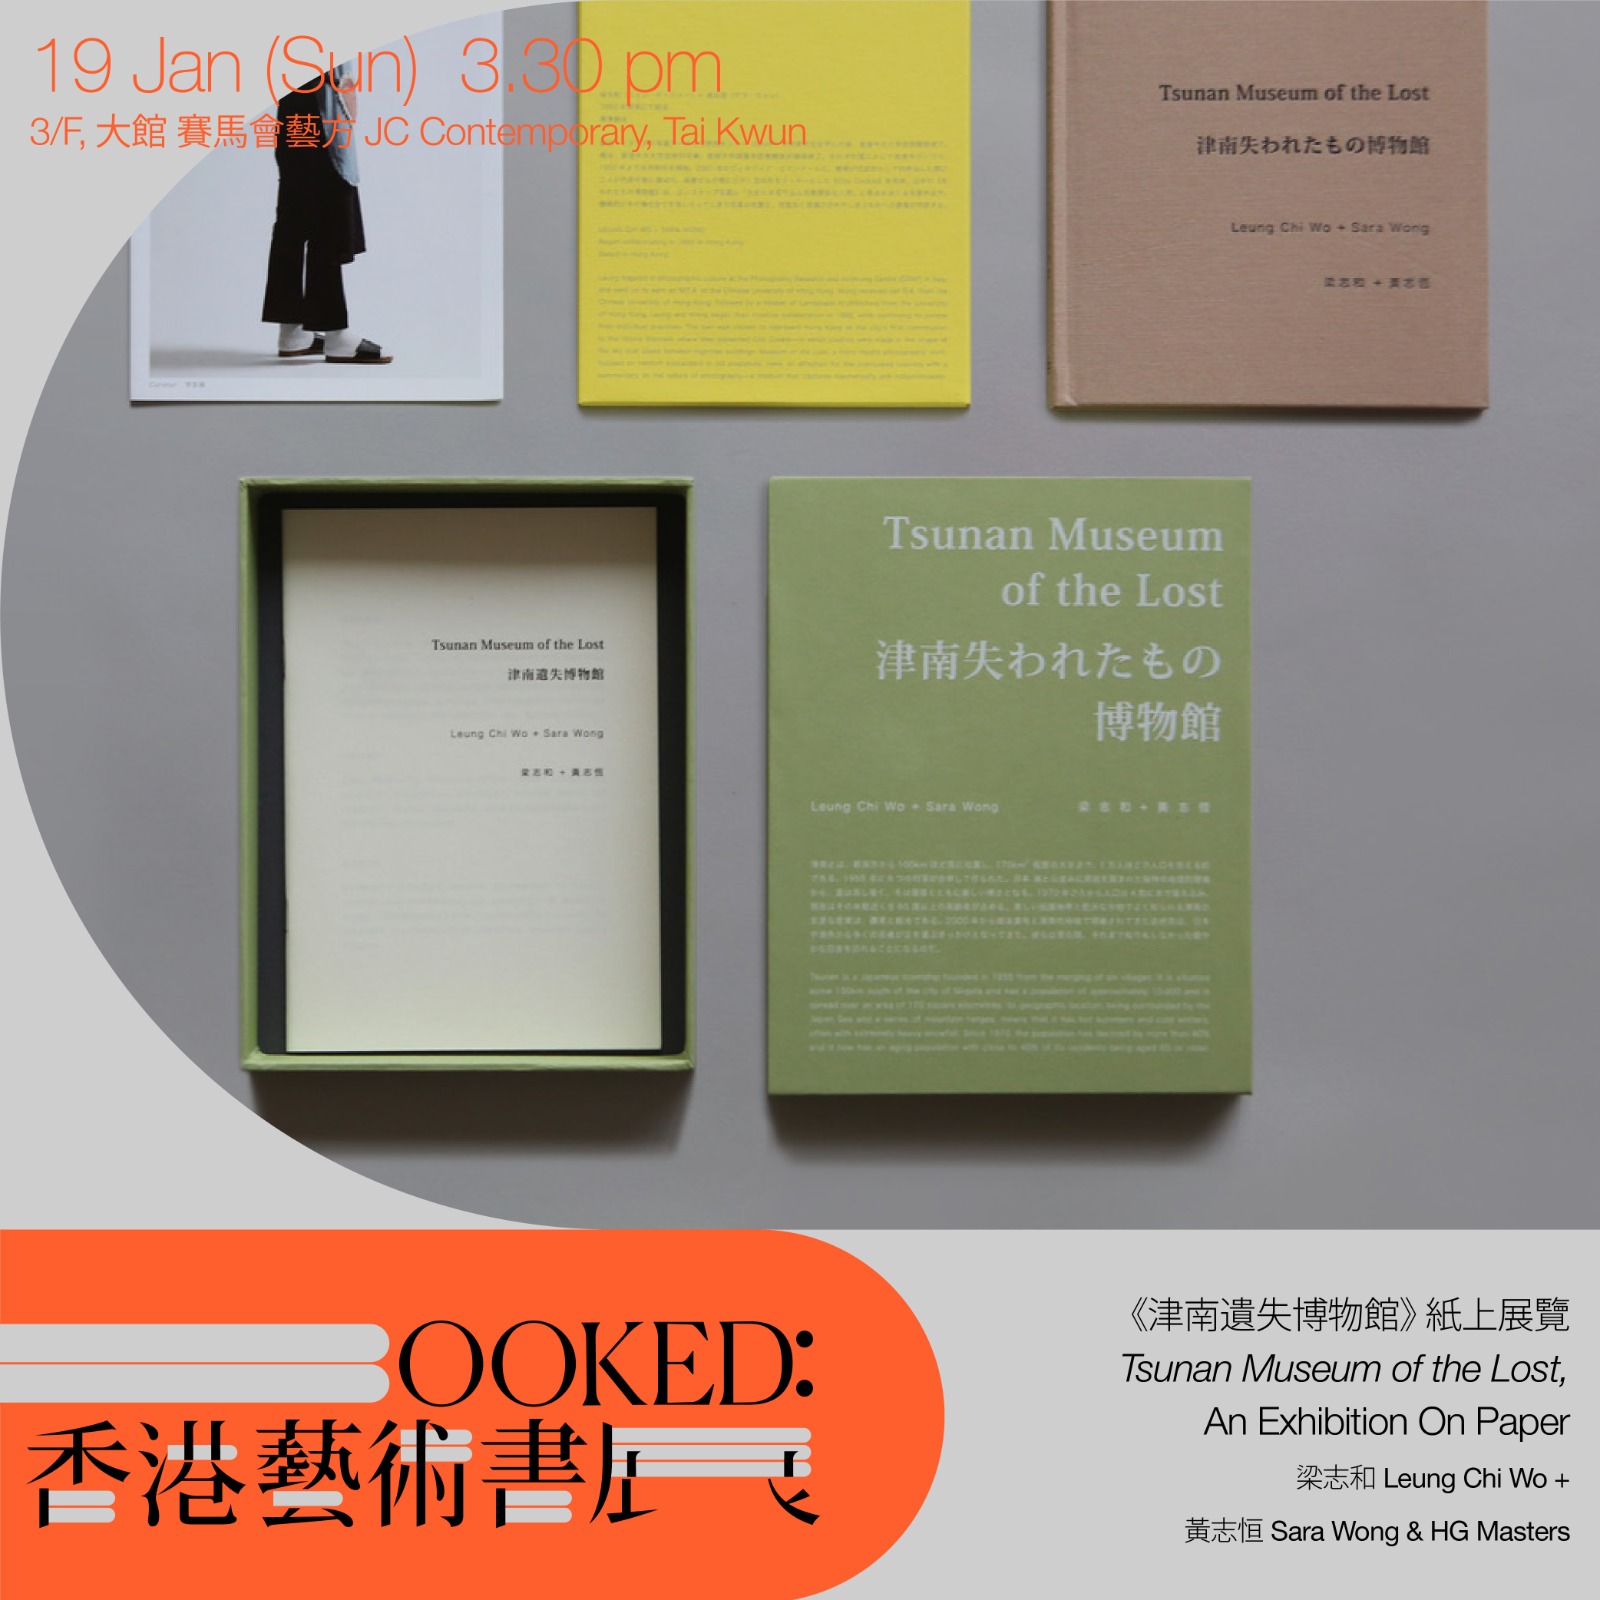 Leung Chi Wo + Sara Wong: Tsunan Museum of the Lost book launch and talk